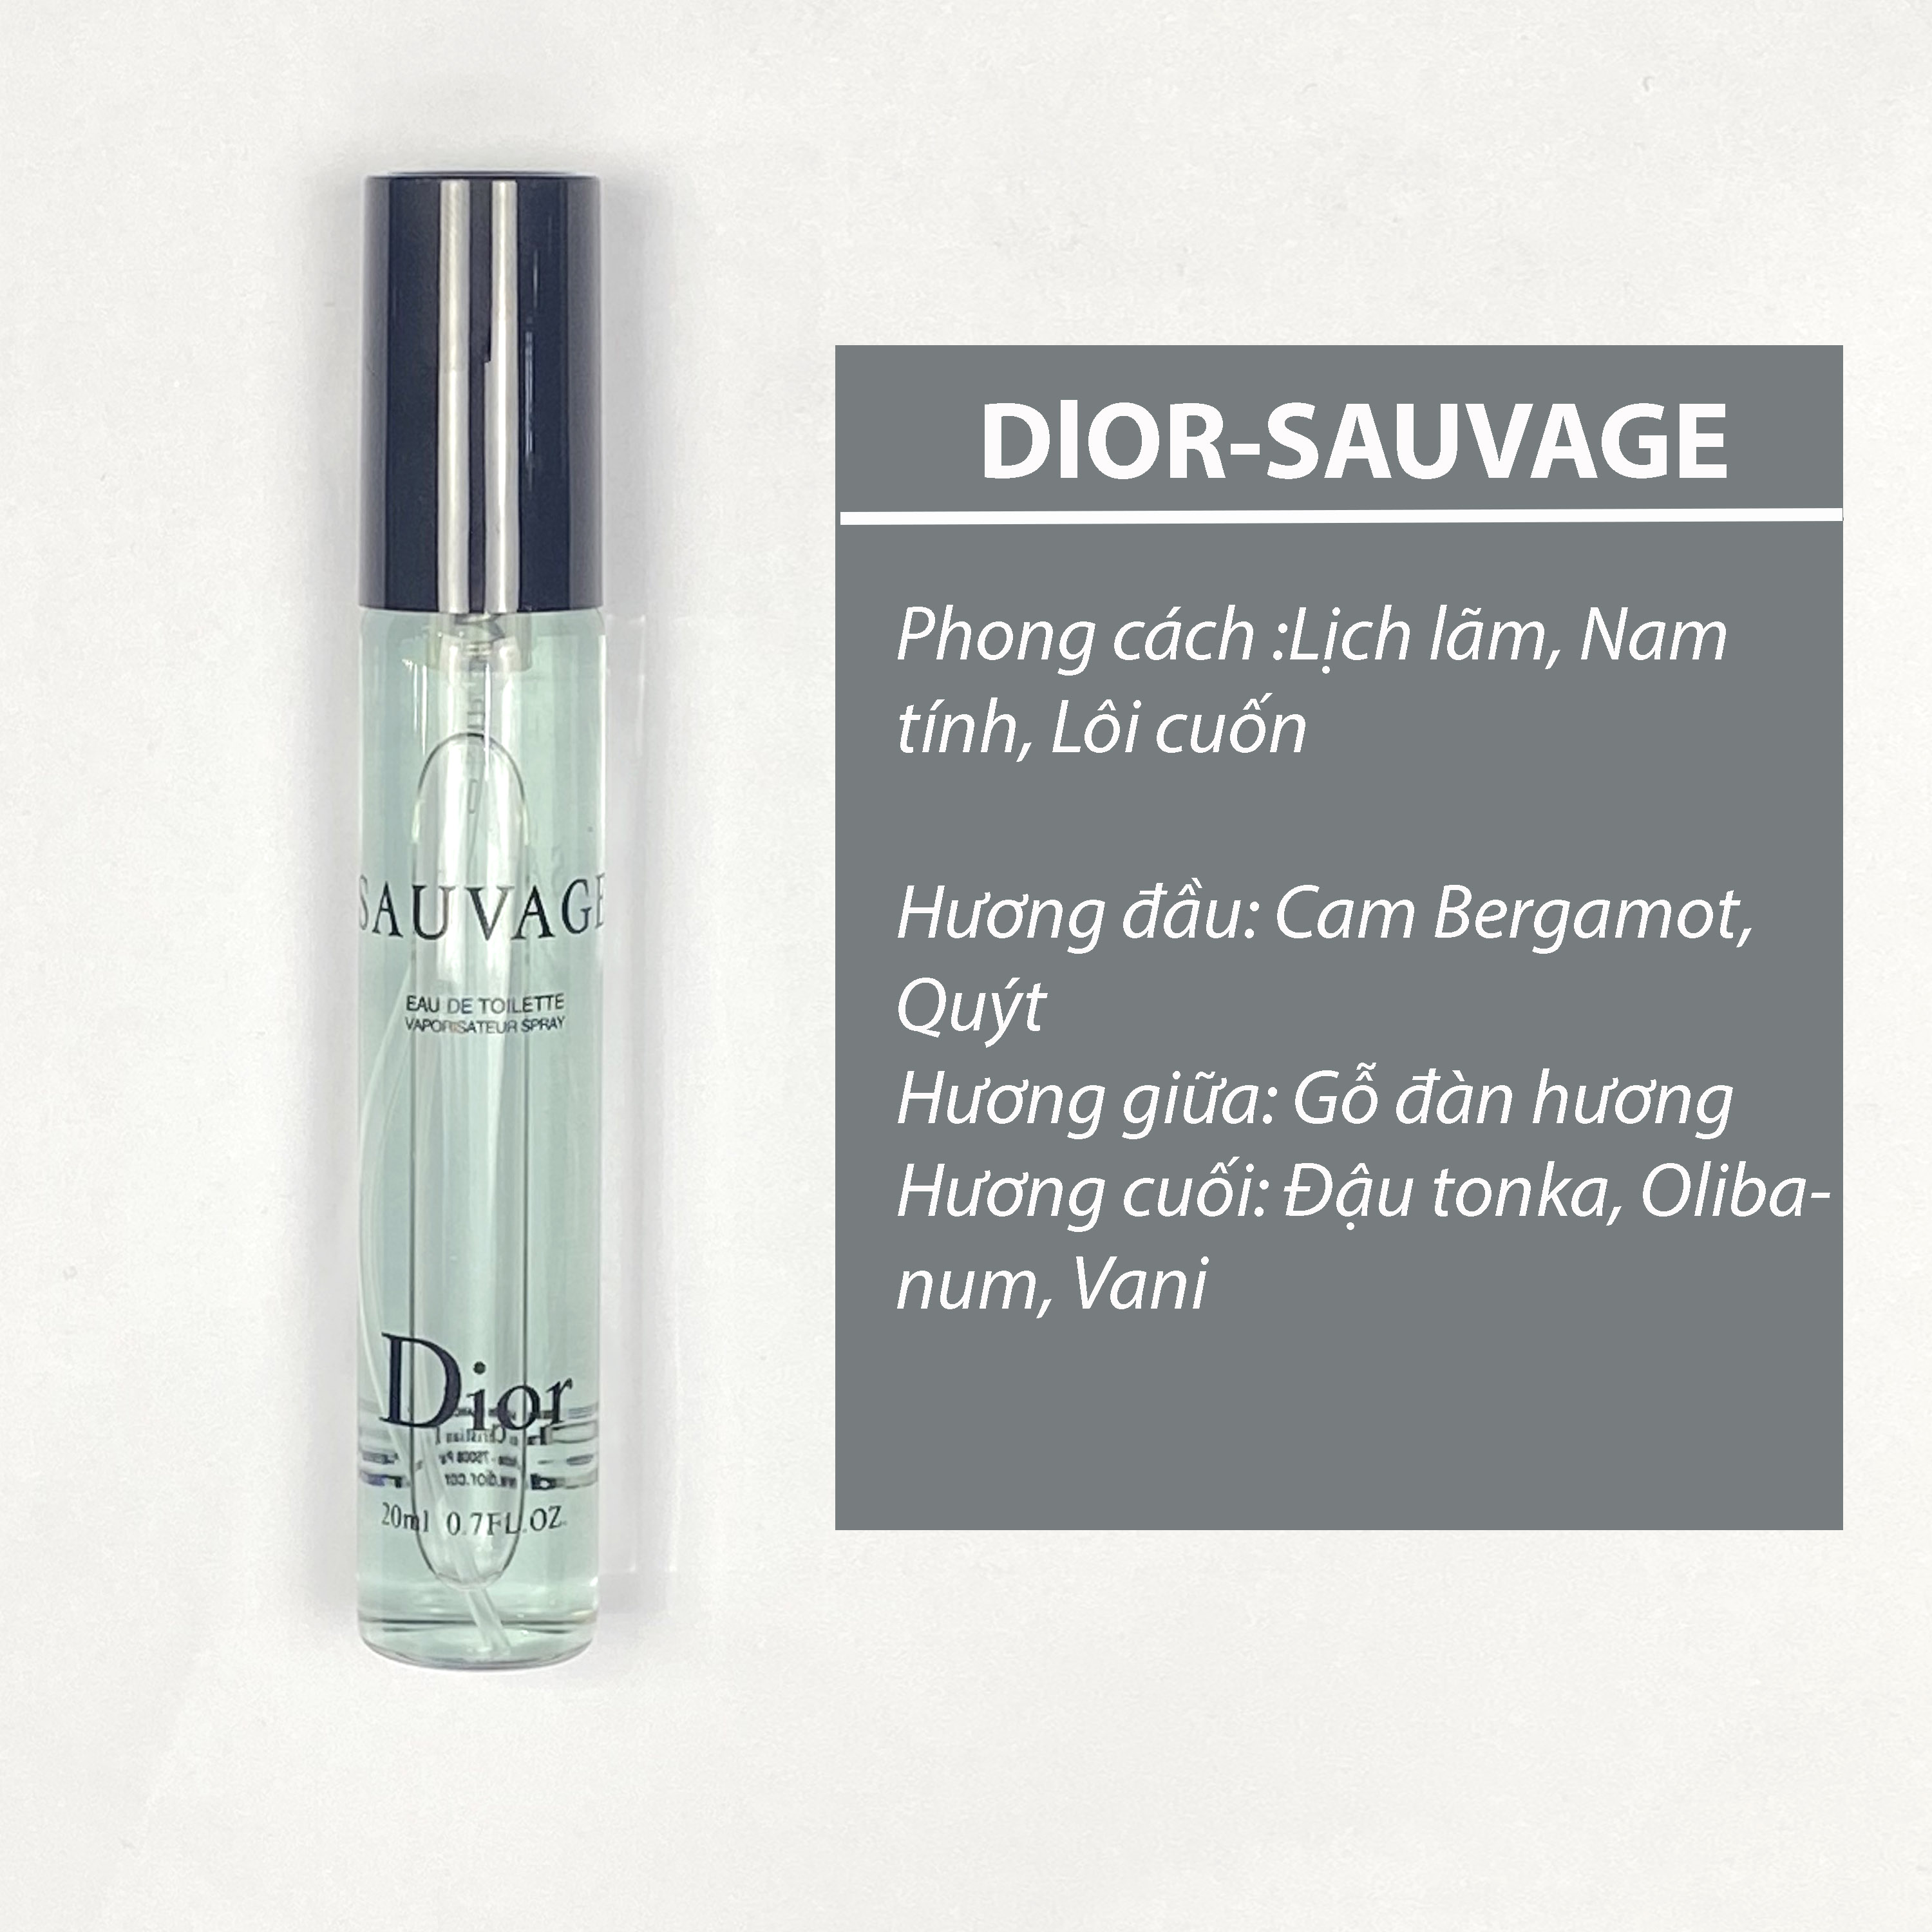 Chiết Dior Sauvage EDP 20ml  Tiến Perfume